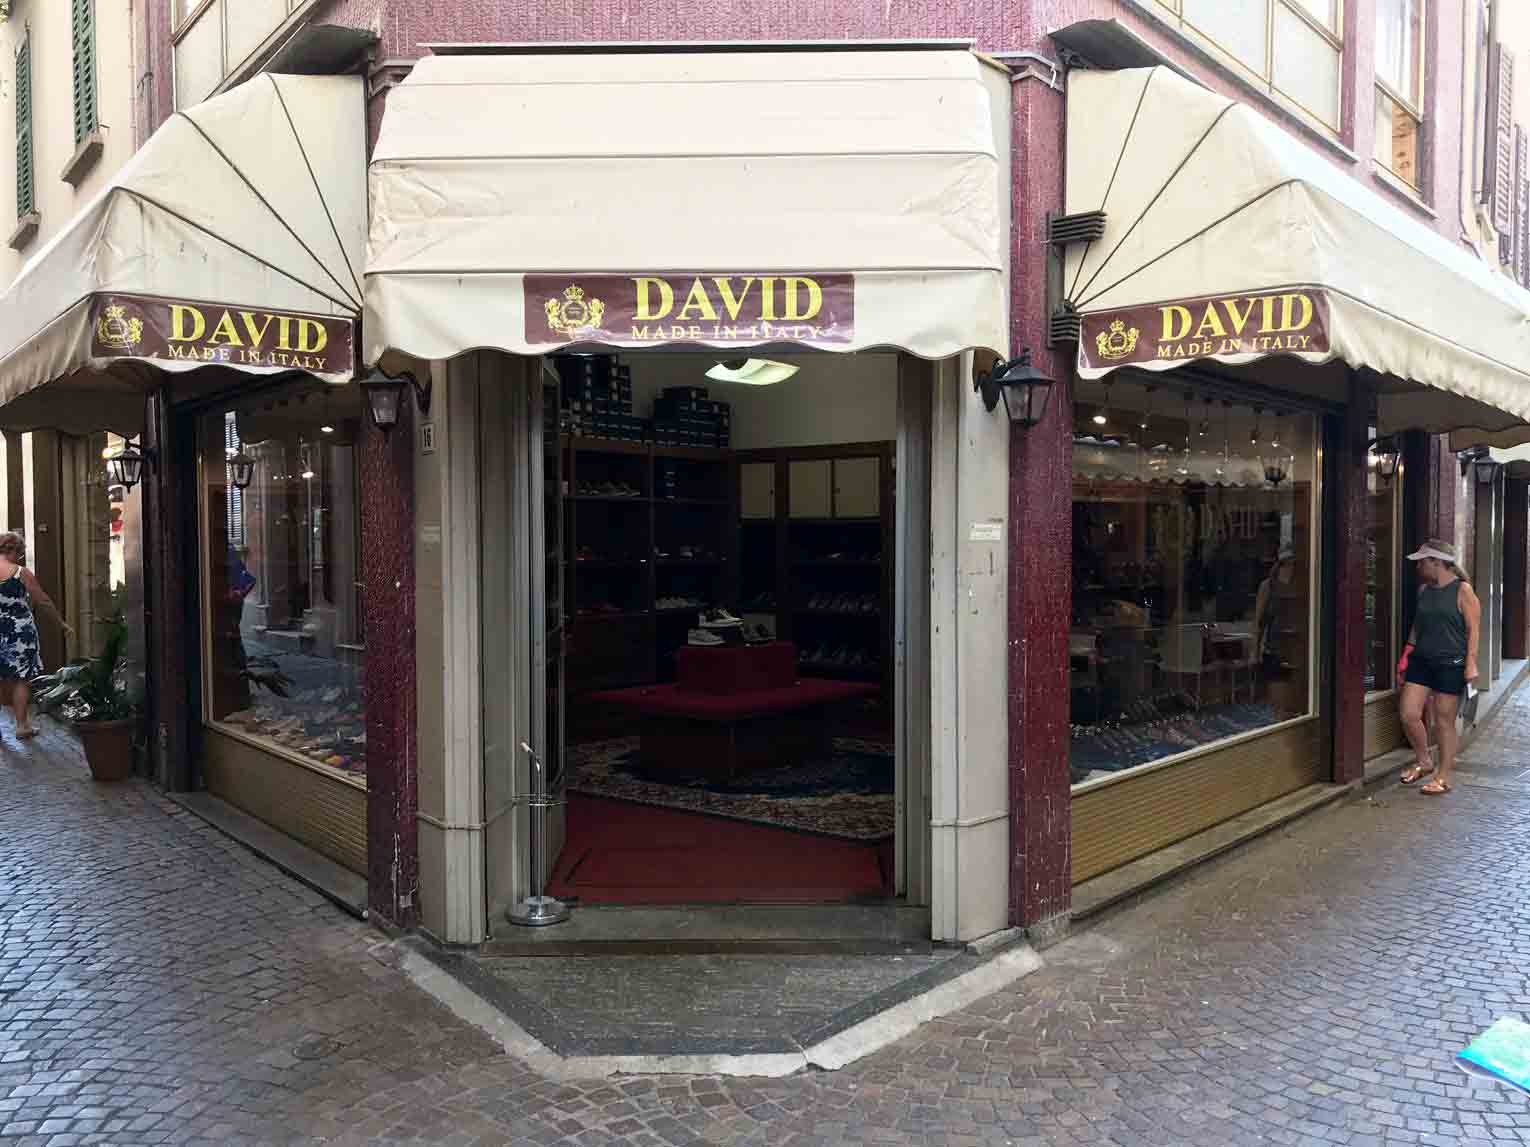  Calzoleria David in Stresa, Via Mazzini